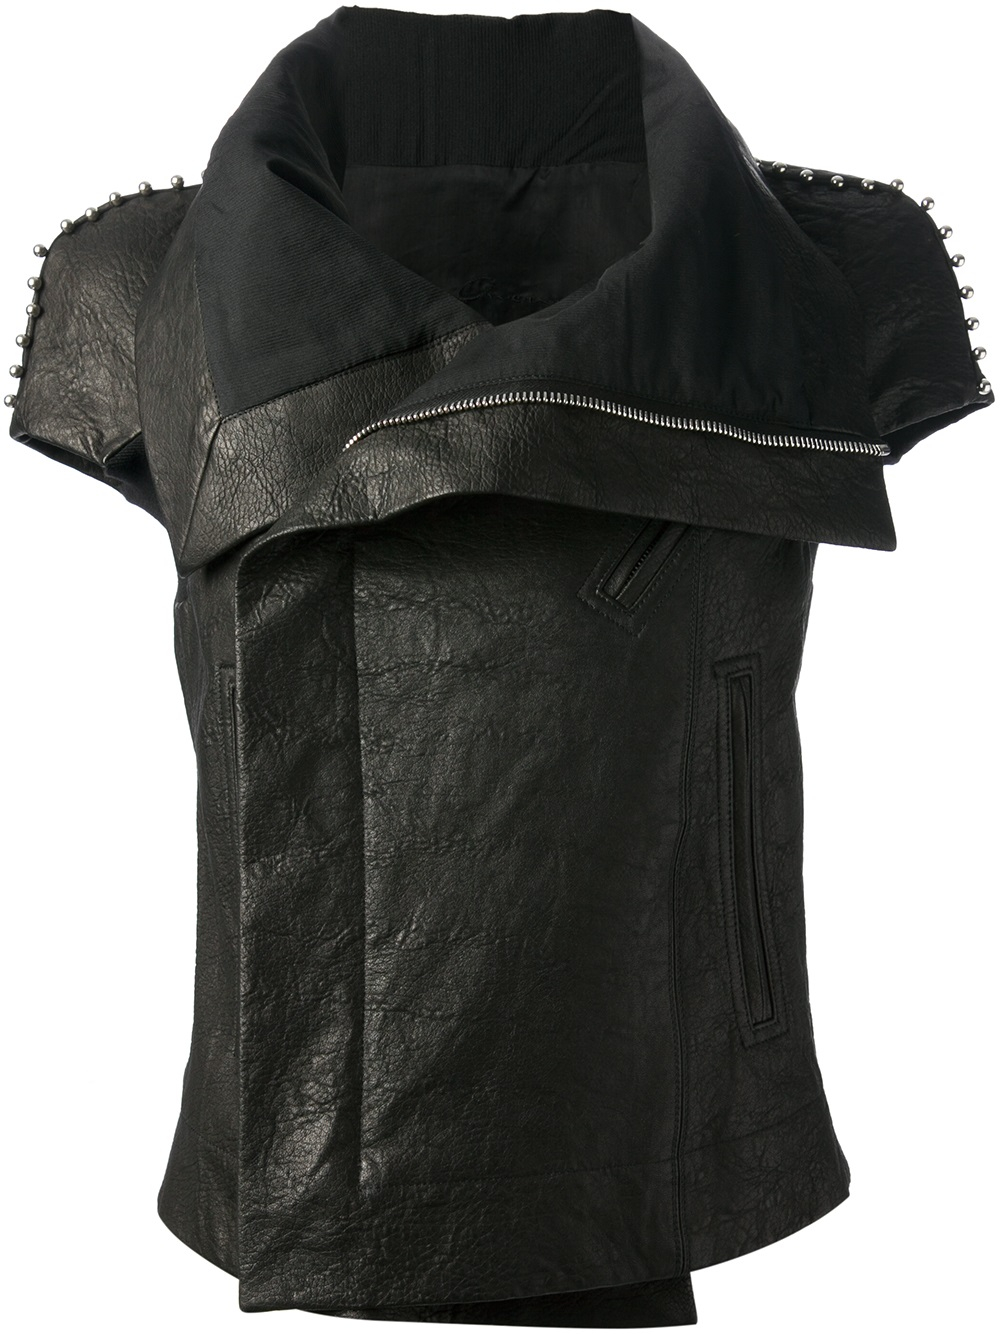 Lyst - Rick Owens Short Sleeve Leather Jacket in Black